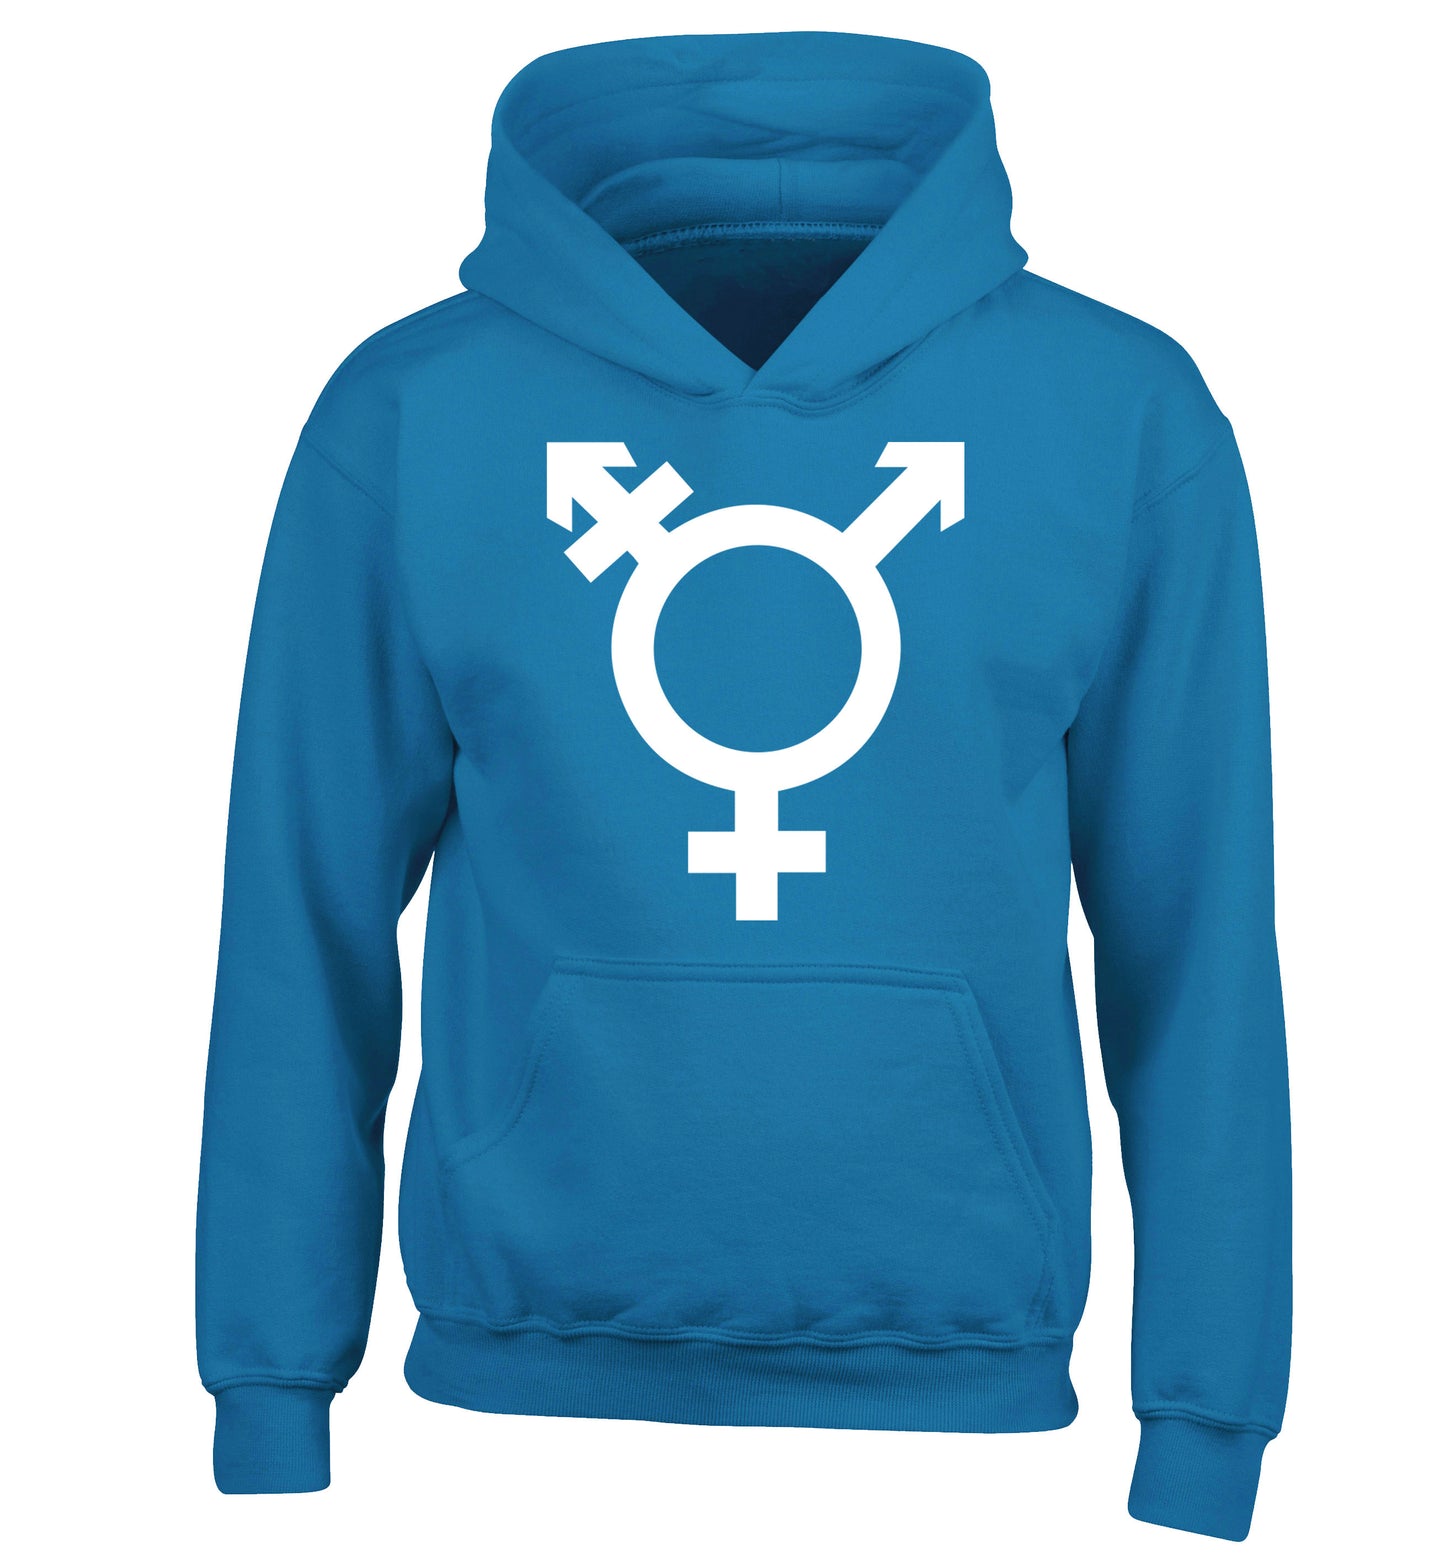 Gender neutral symbol large children's blue hoodie 12-14 Years